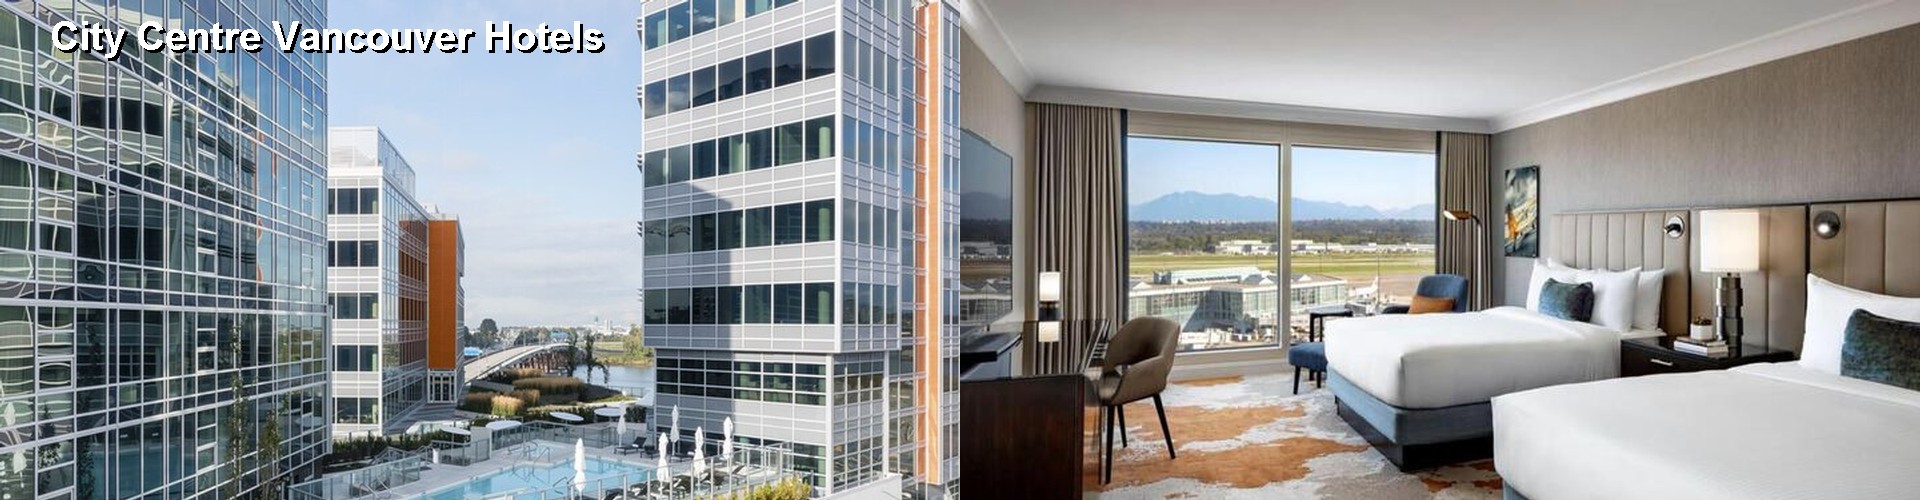 5 Best Hotels near City Centre Vancouver